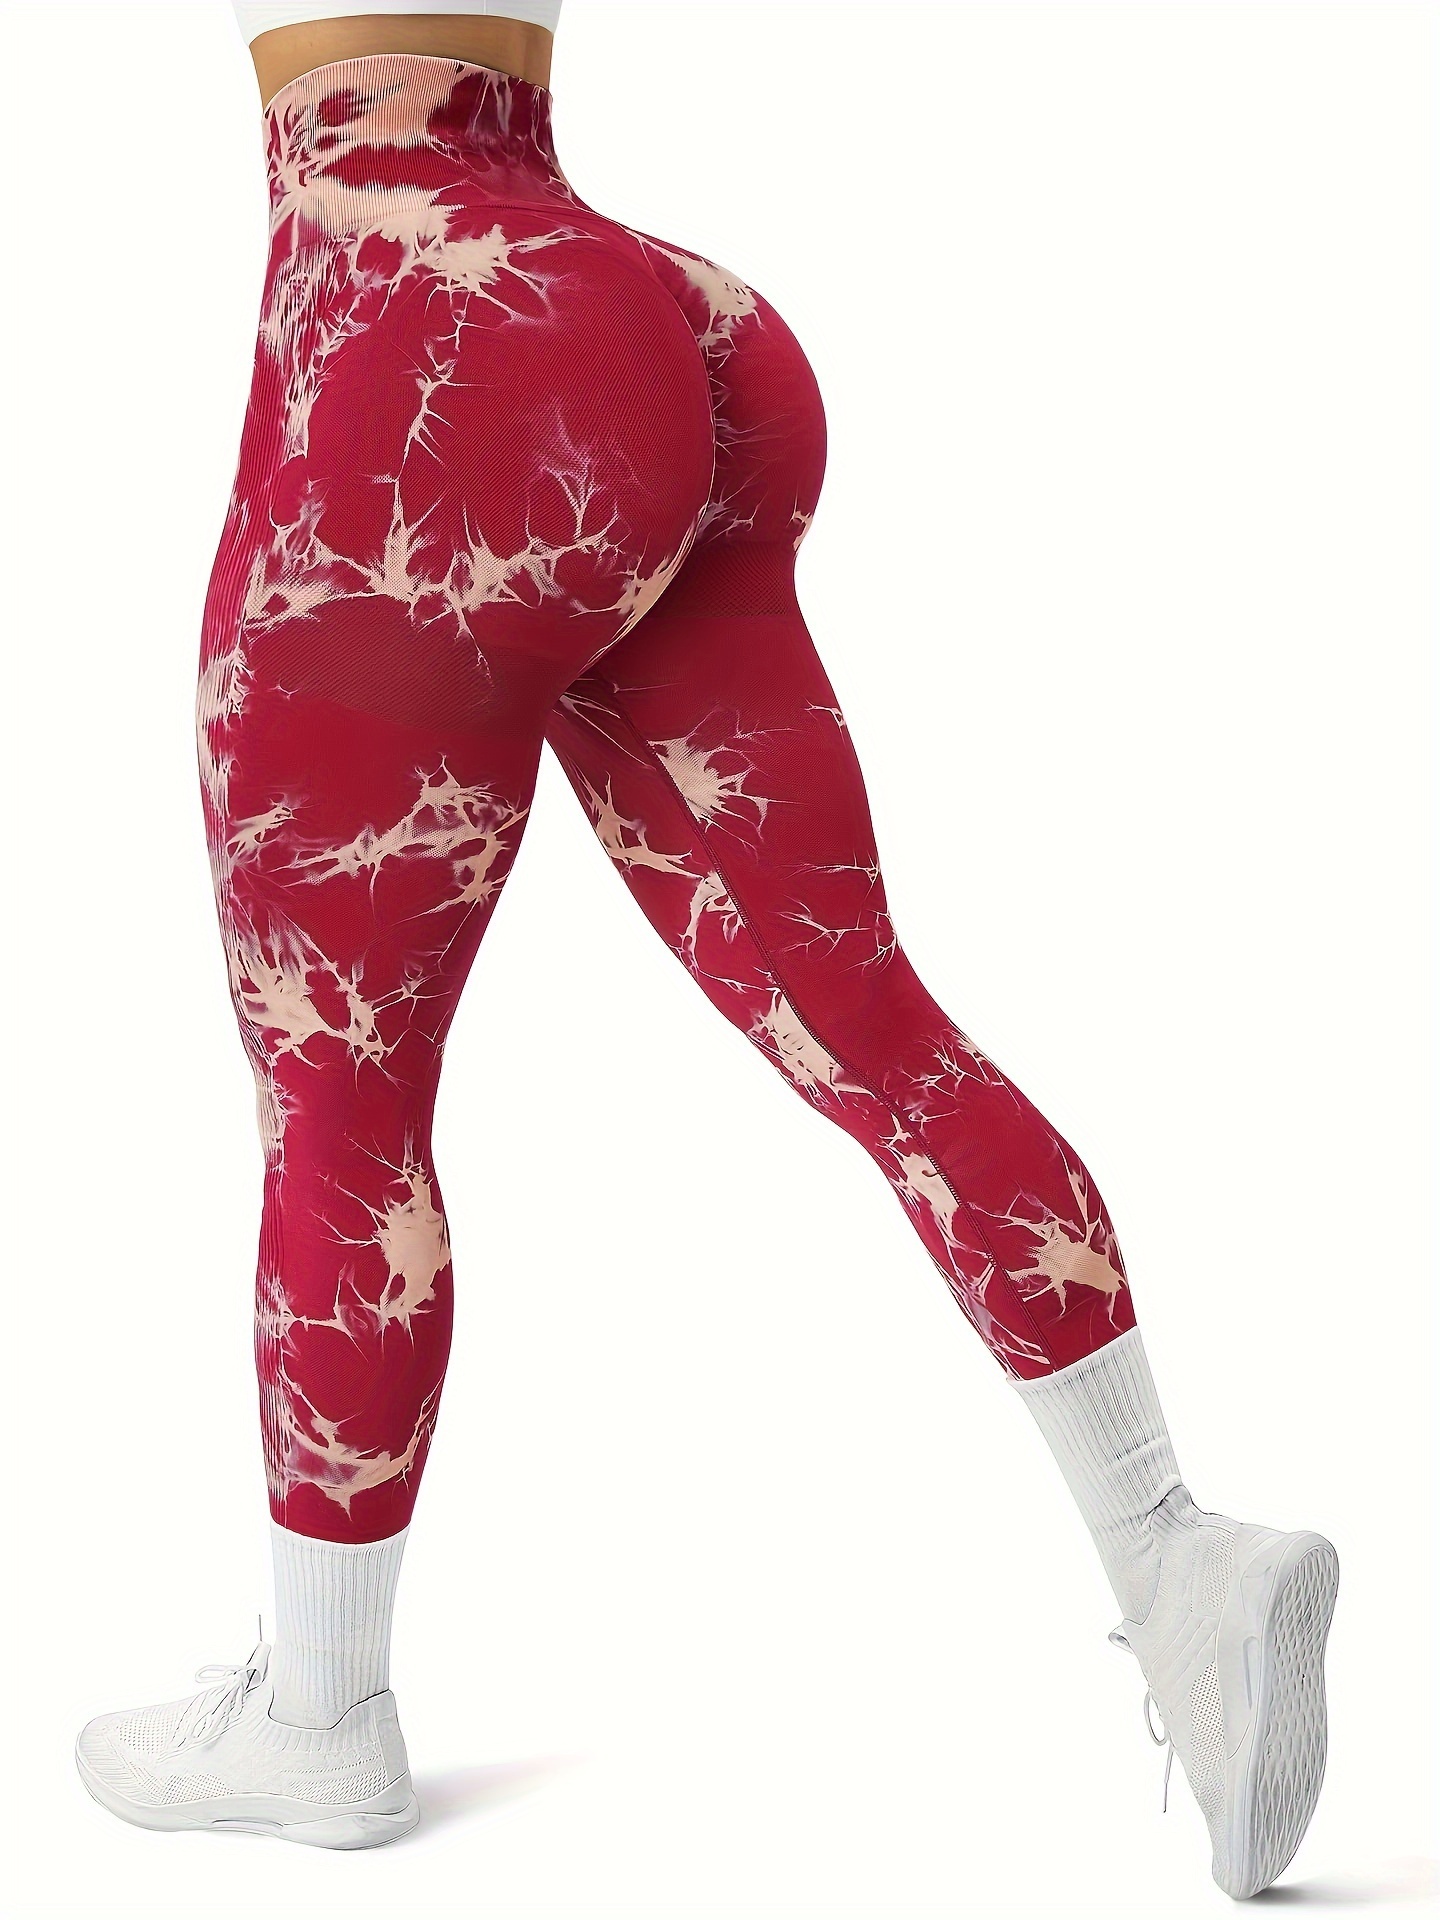 Fairtex Womens Compression Pants - Order Ladies Gym Clothing at